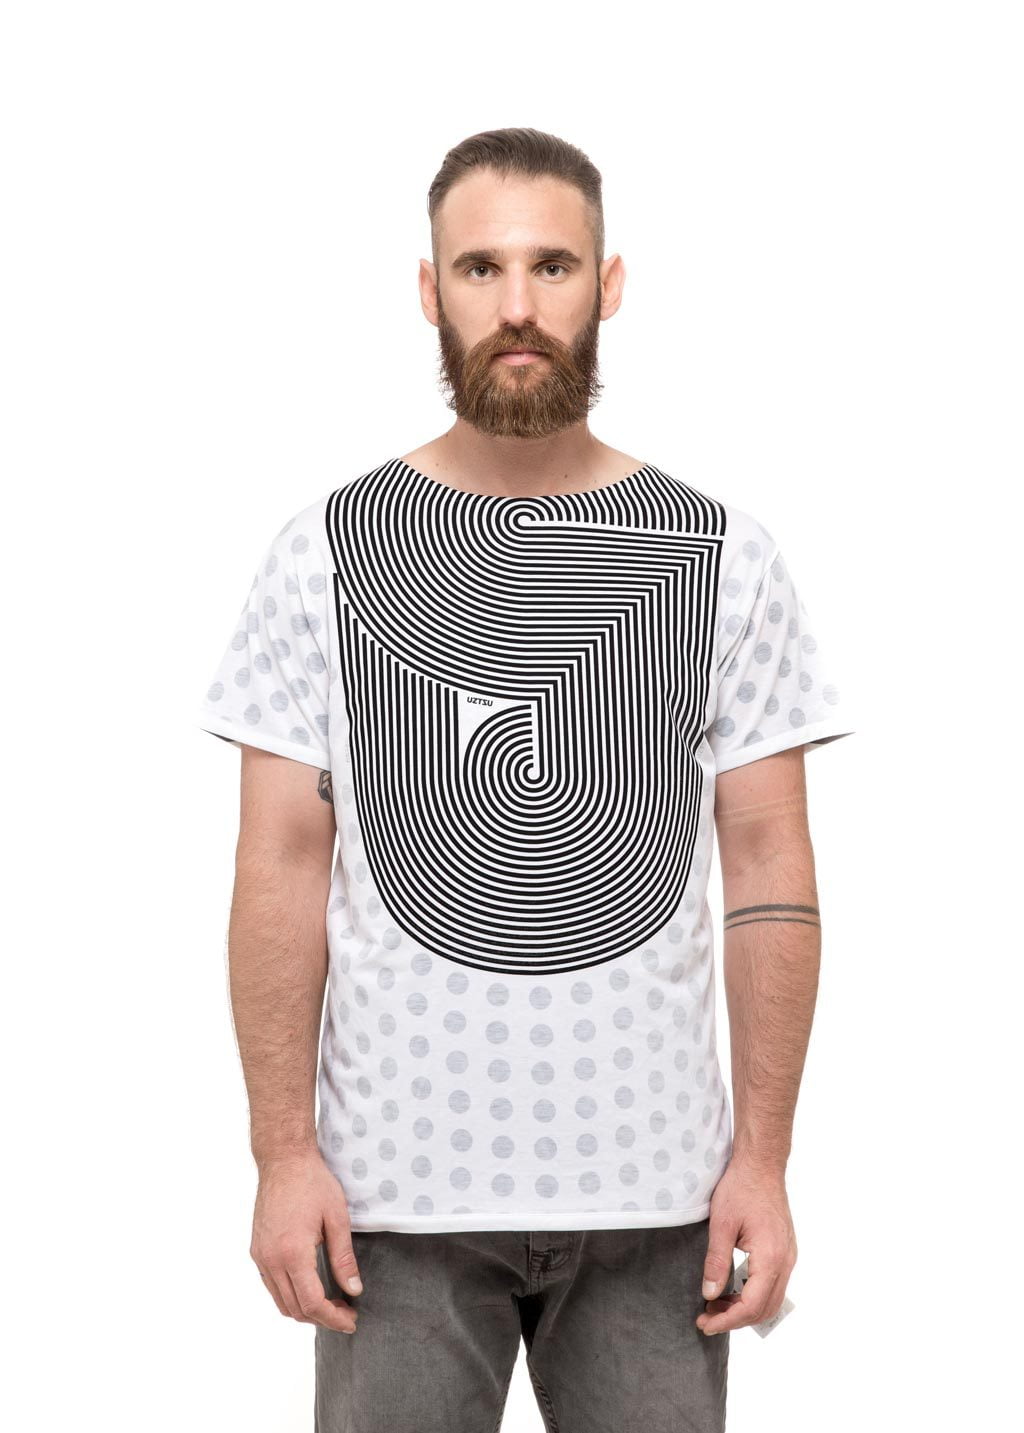 Tecolotin - Uztzu Clothing - Shop Super 4 in 1 T-shirts, Pants and hoodies online!